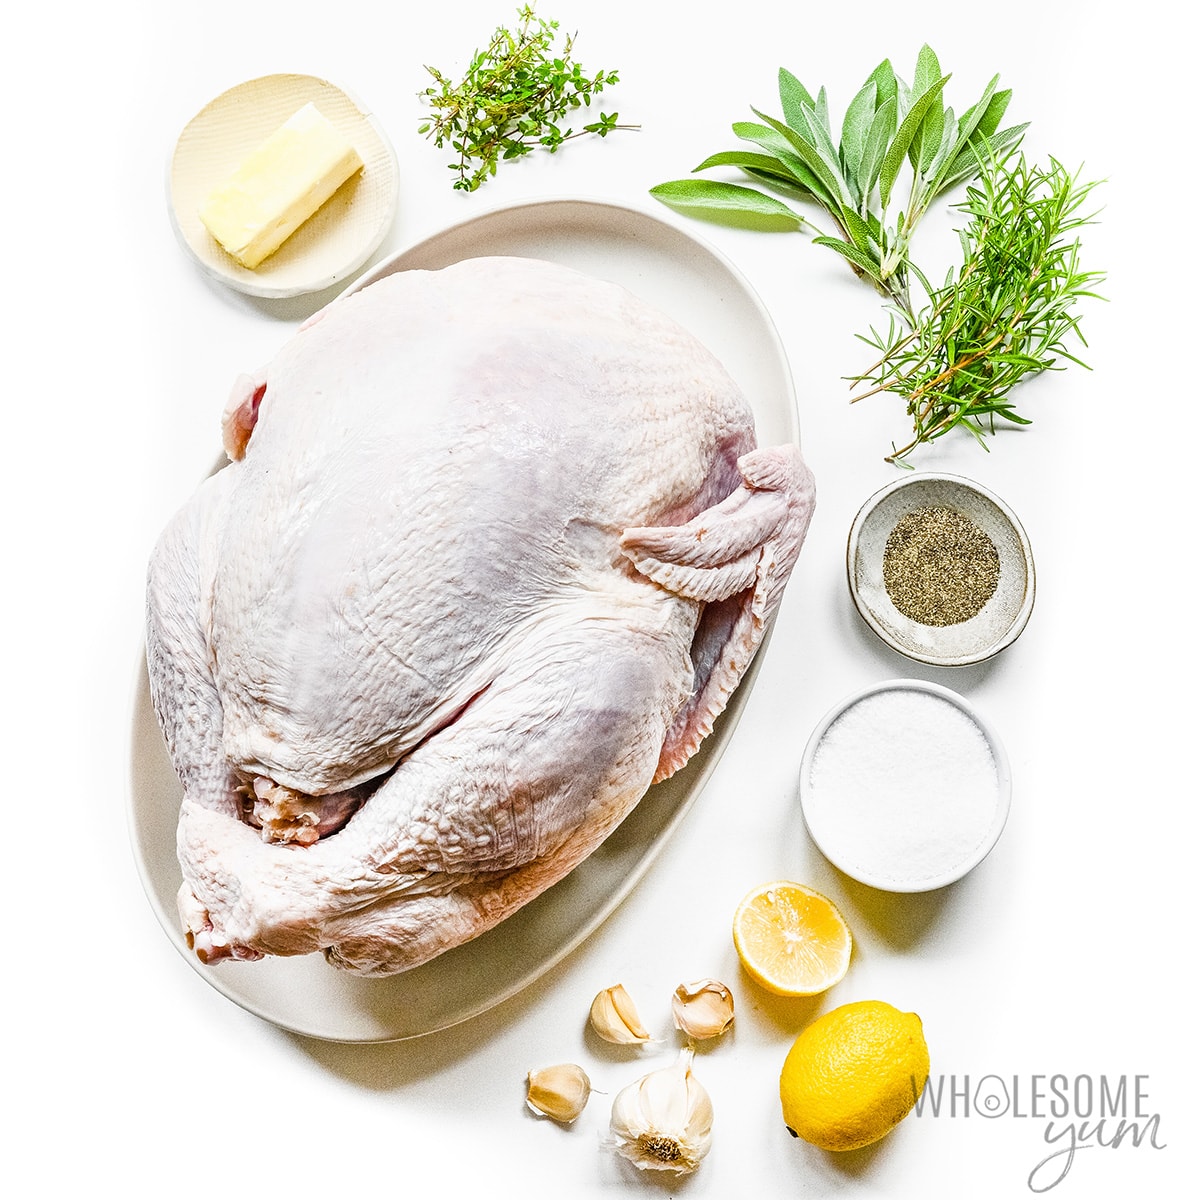 Easy roasted turkey recipe ingredients on plates.